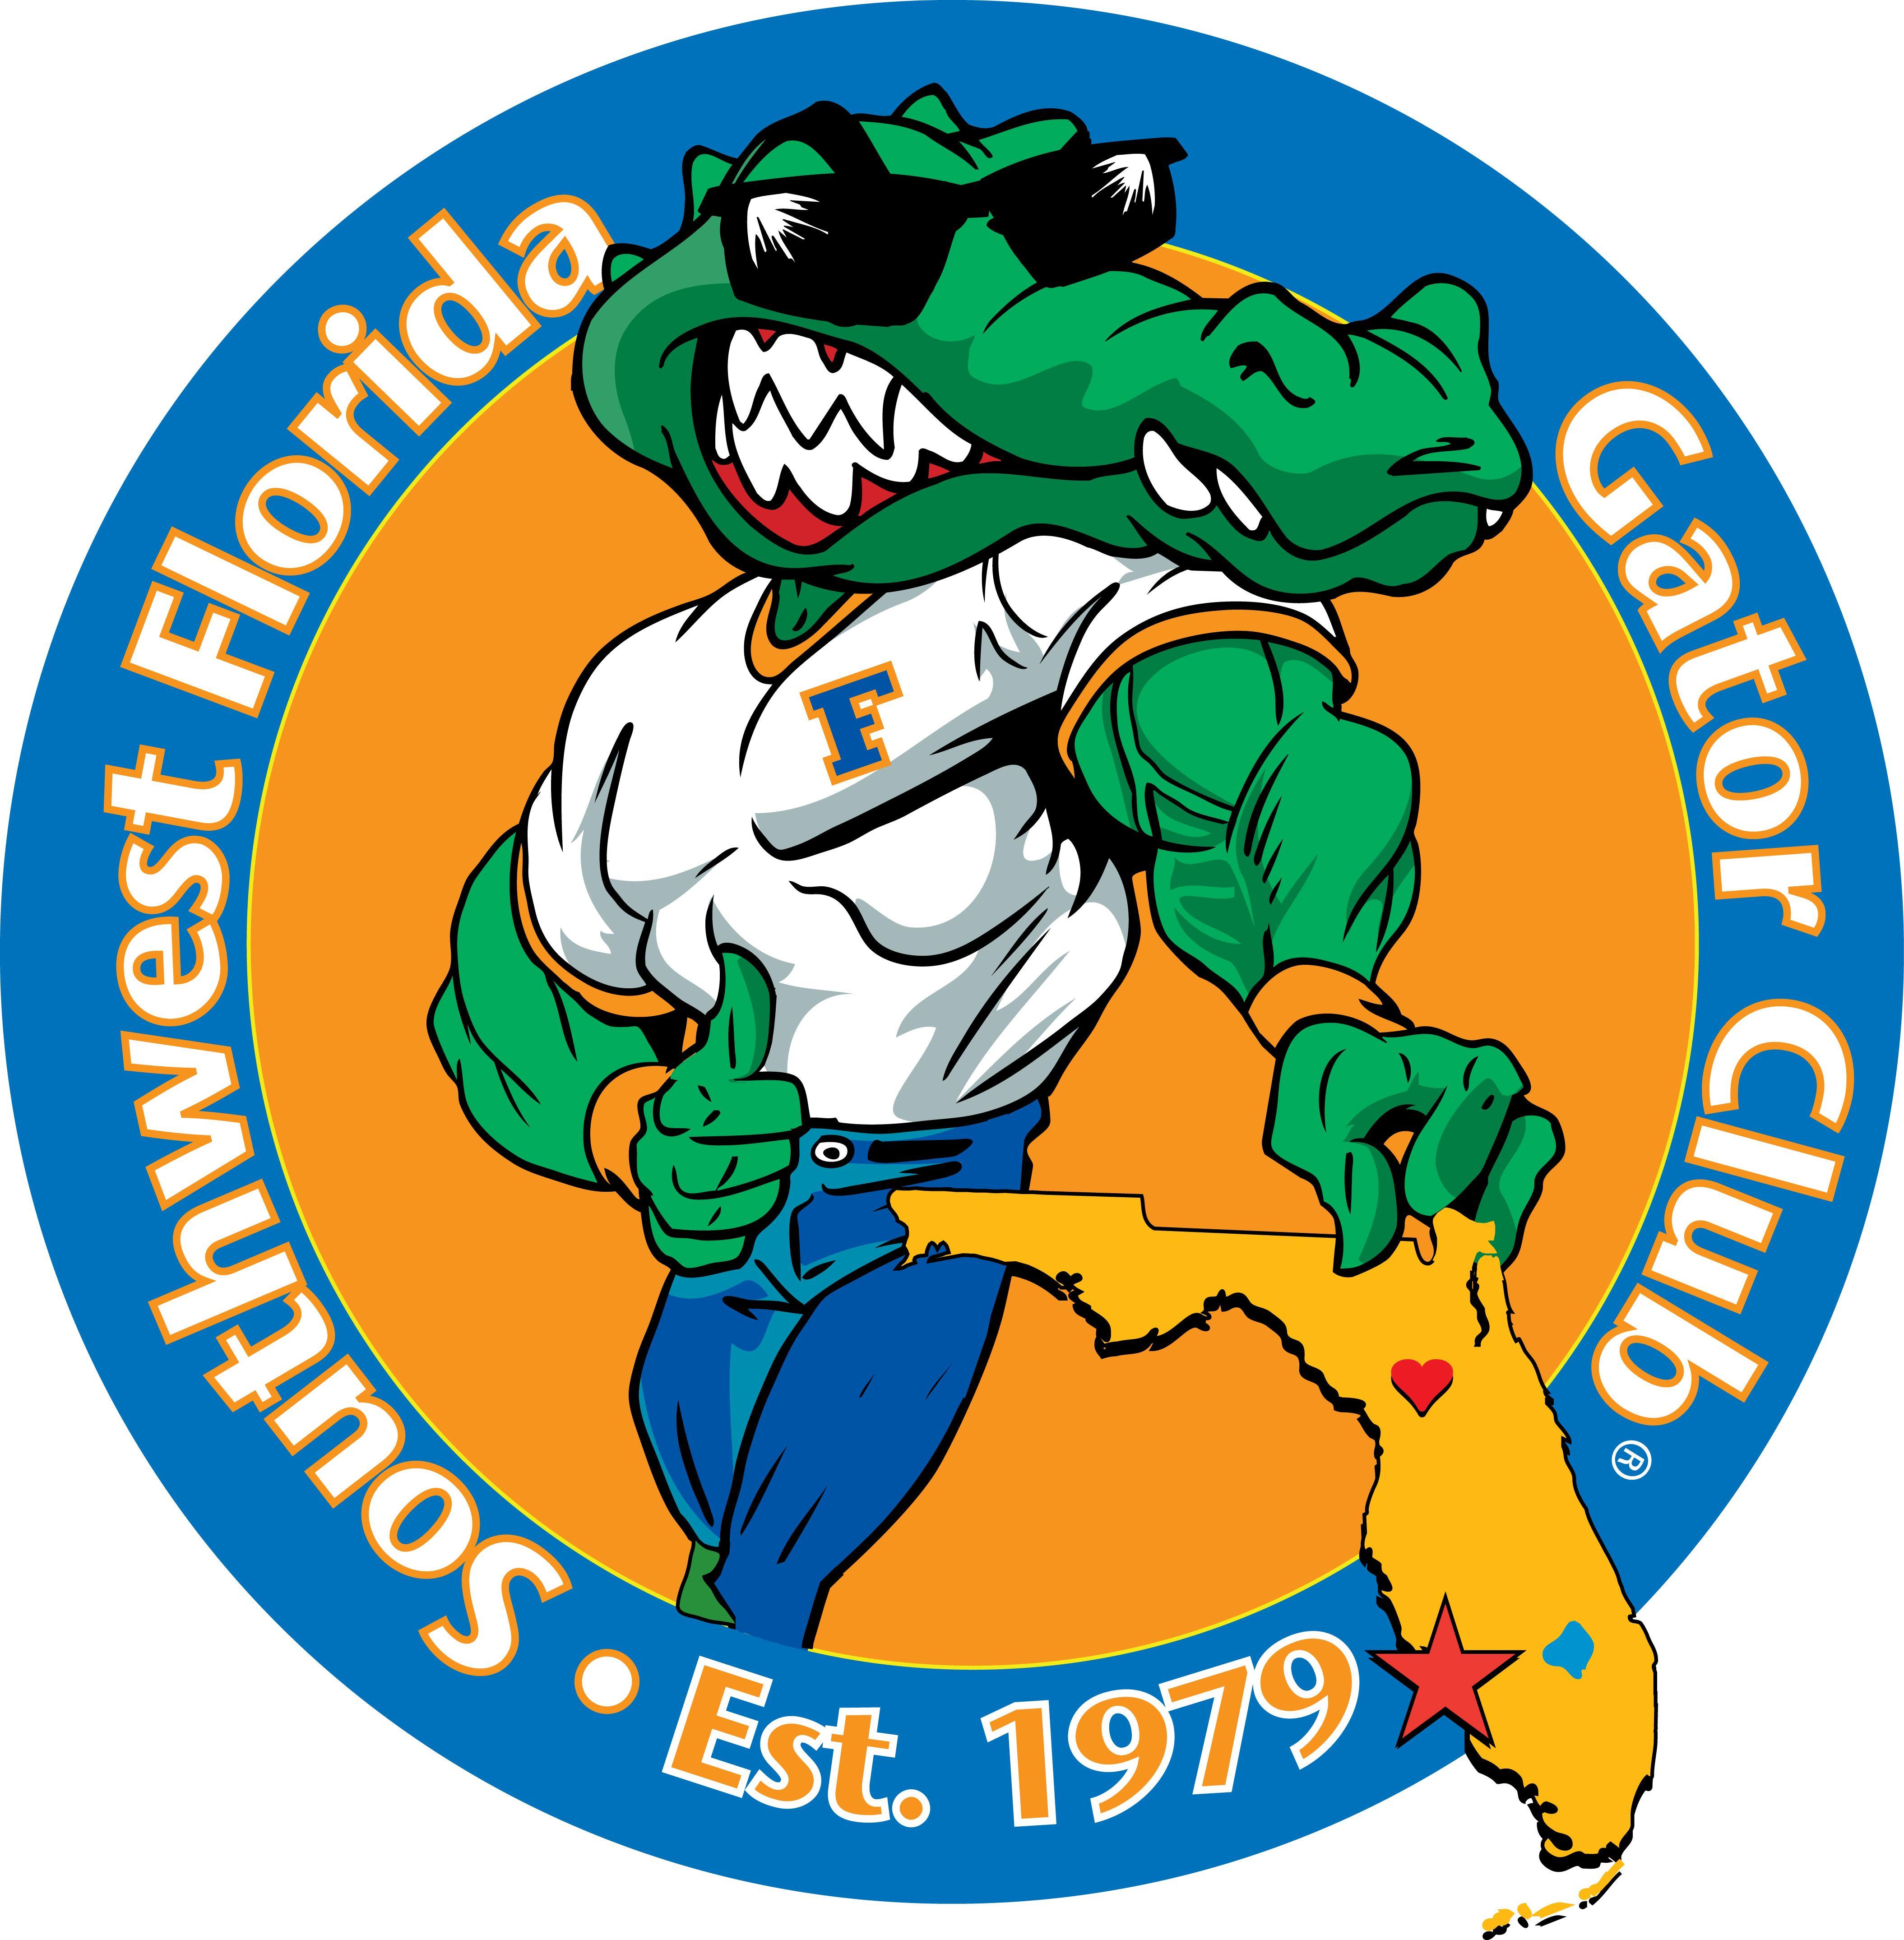 Fla Gators Logo - October. Crownechronicles's Blog